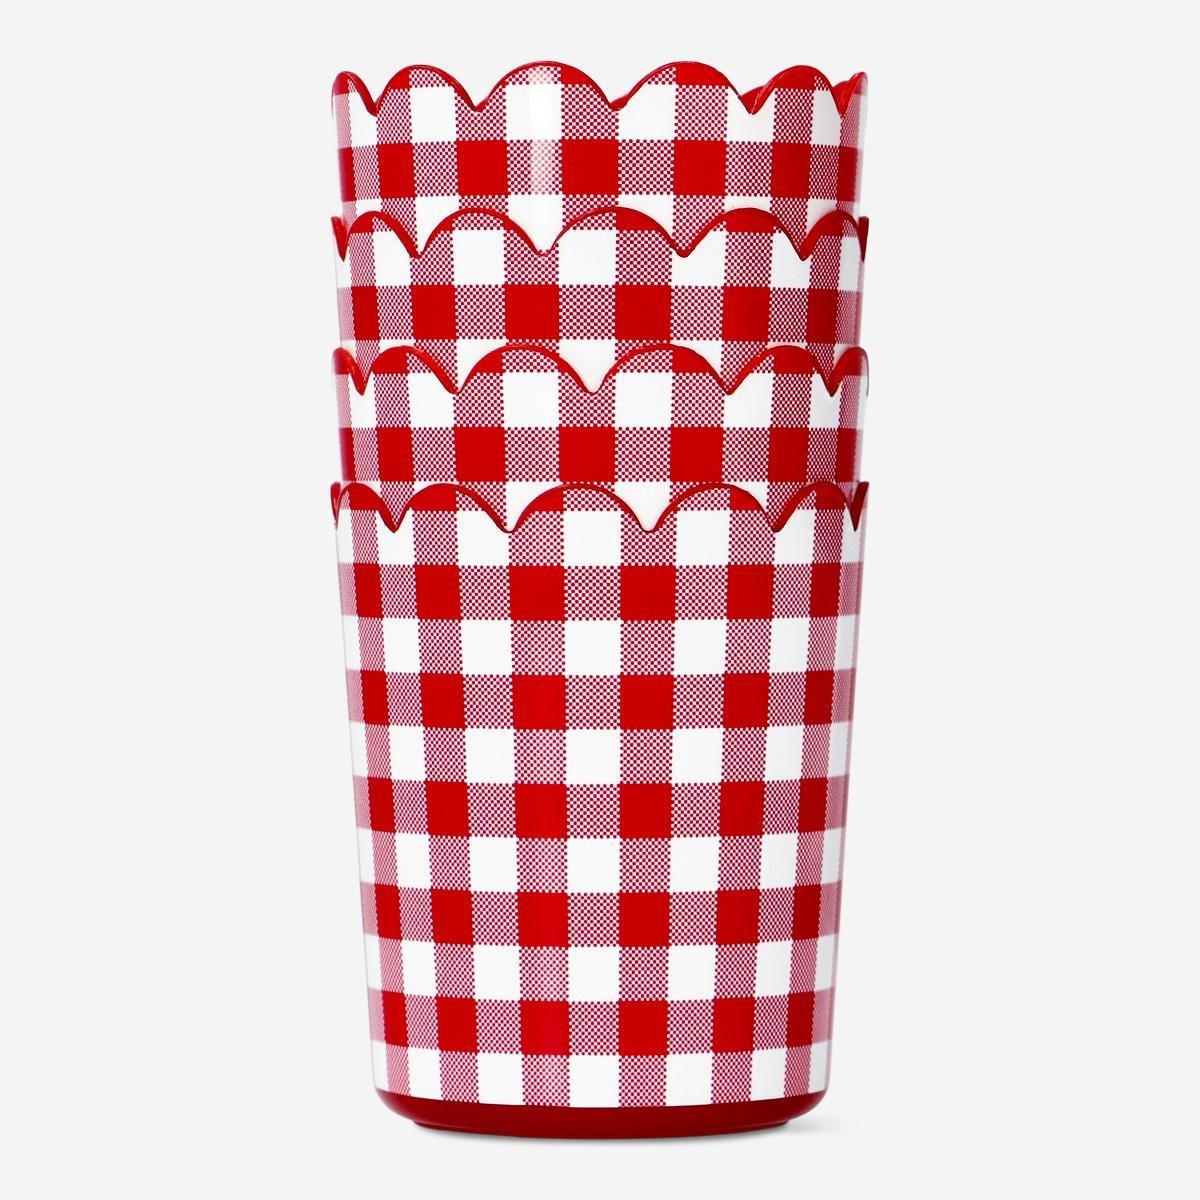 Red plastic cups. 4 pcs